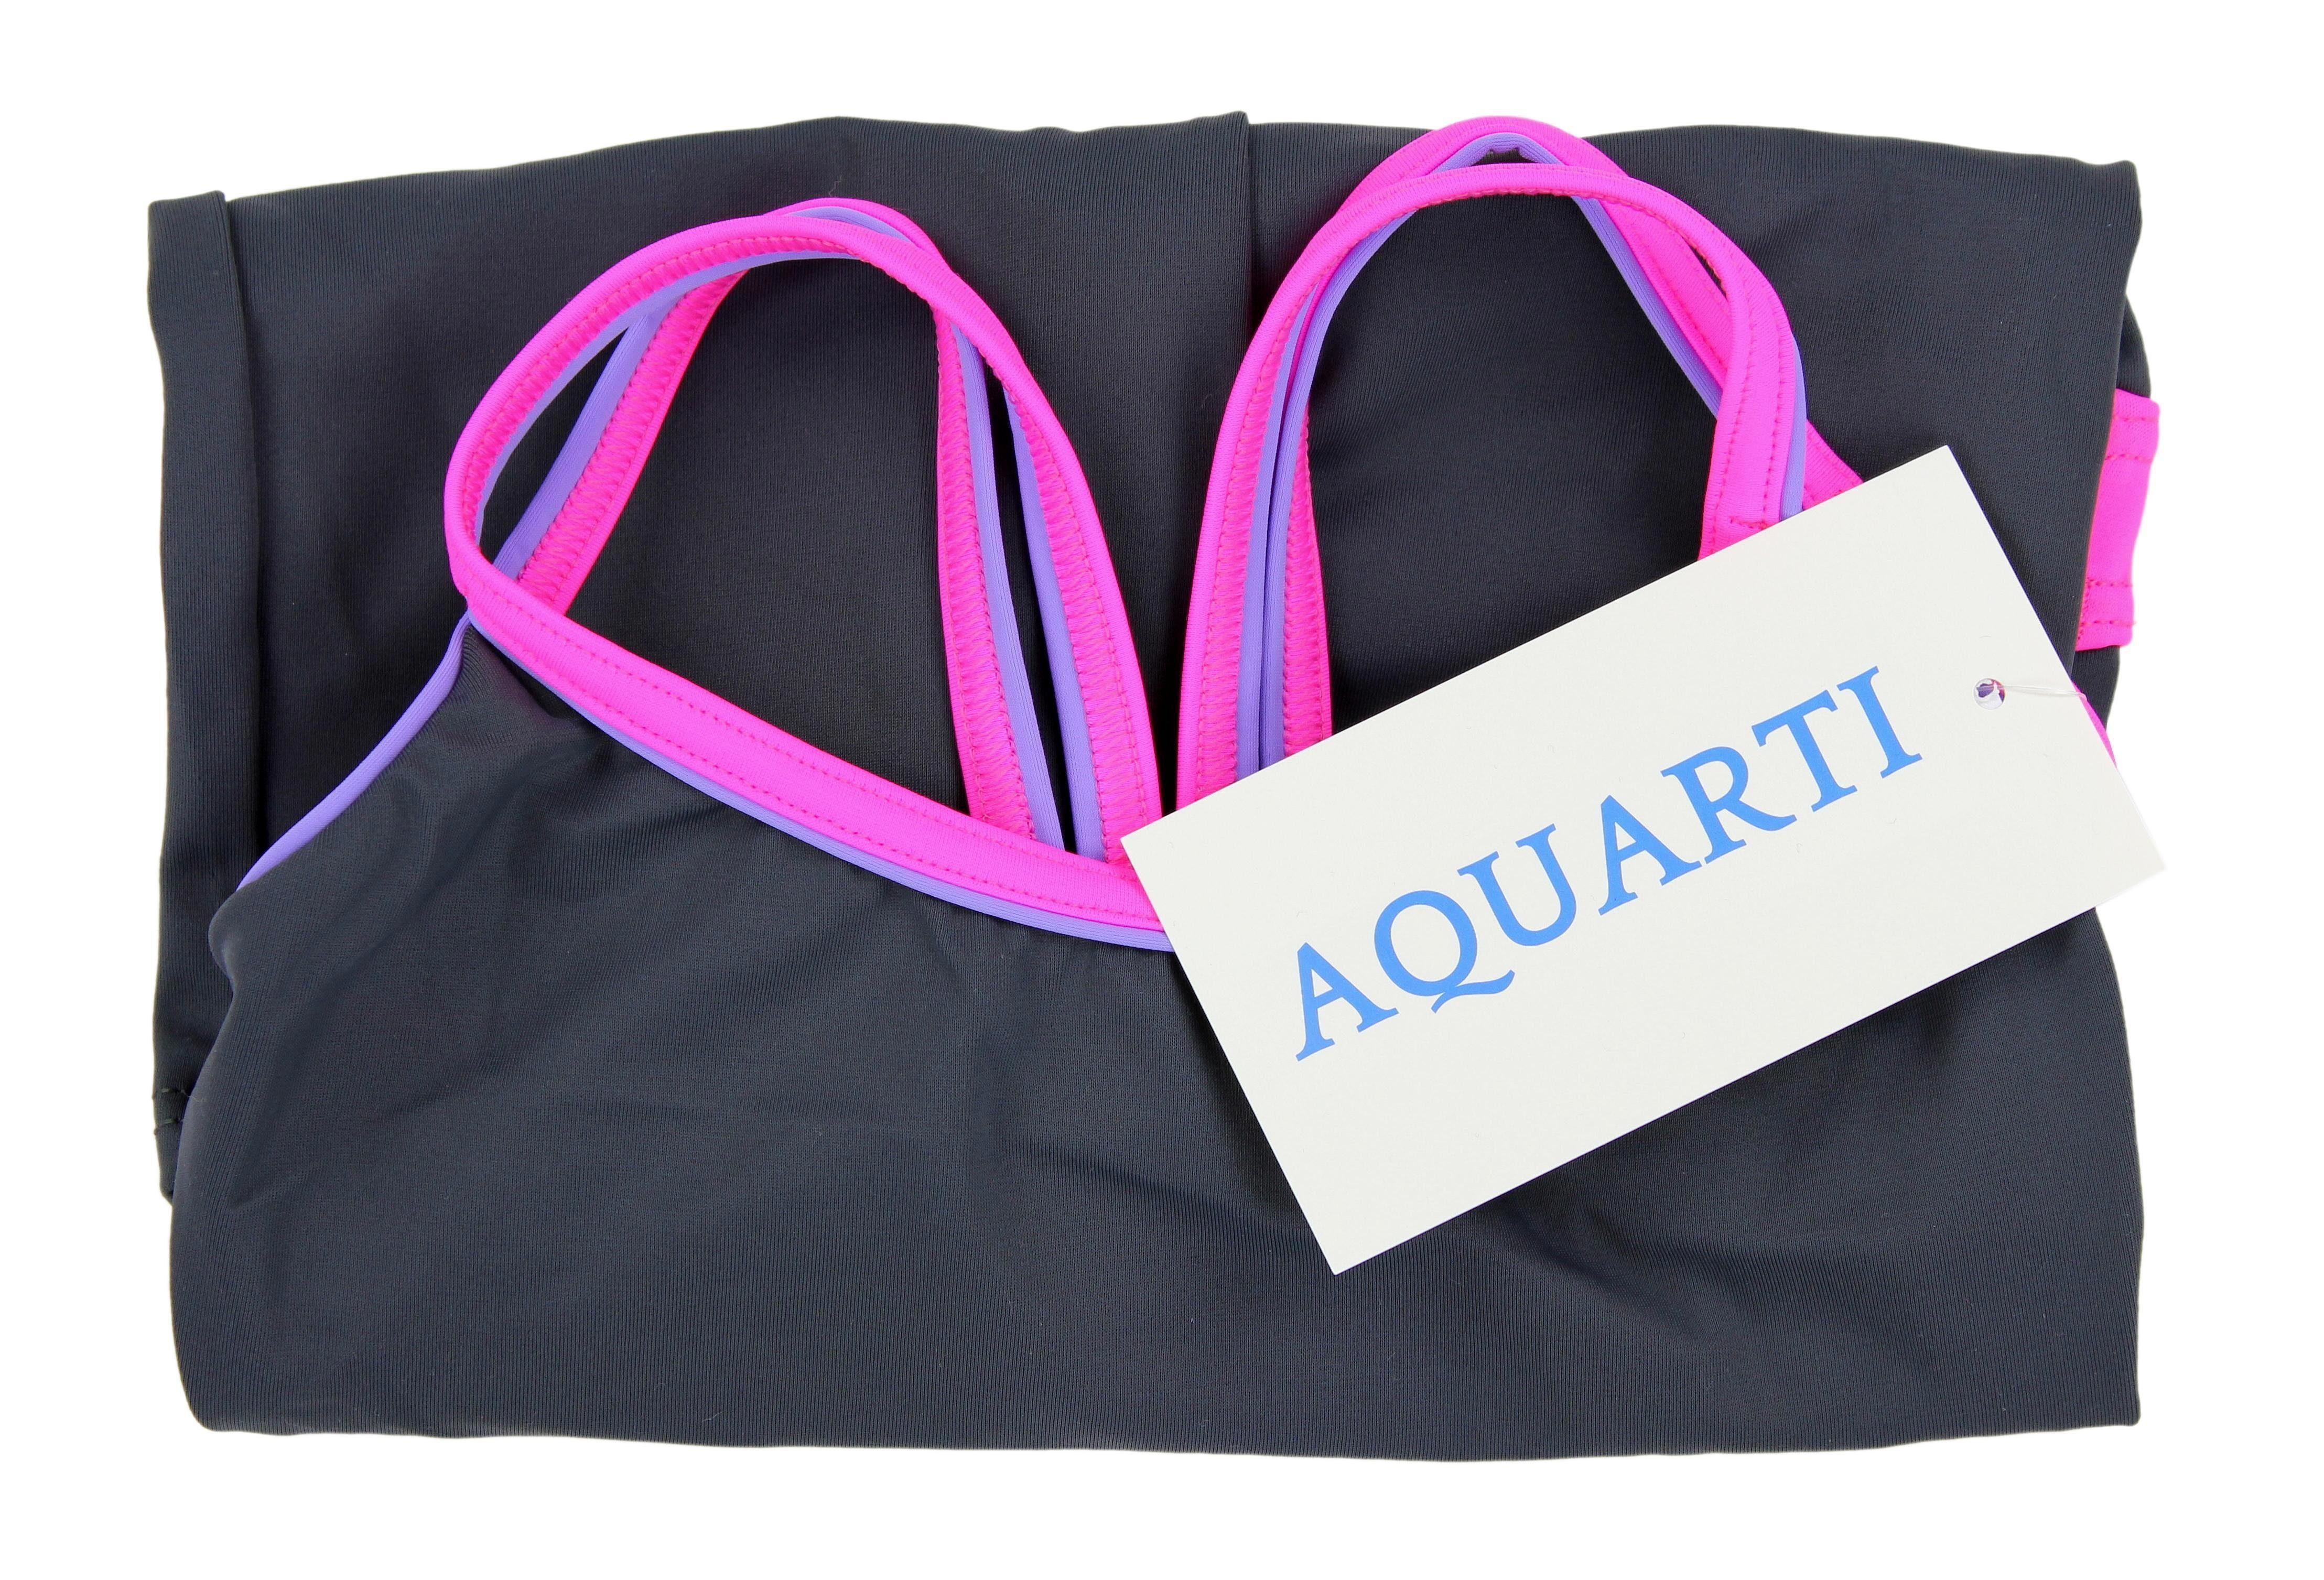 Aquarti Badeanzug Aquarti Mädchen Badeanzug Bein mit / Racerback Pink Grau